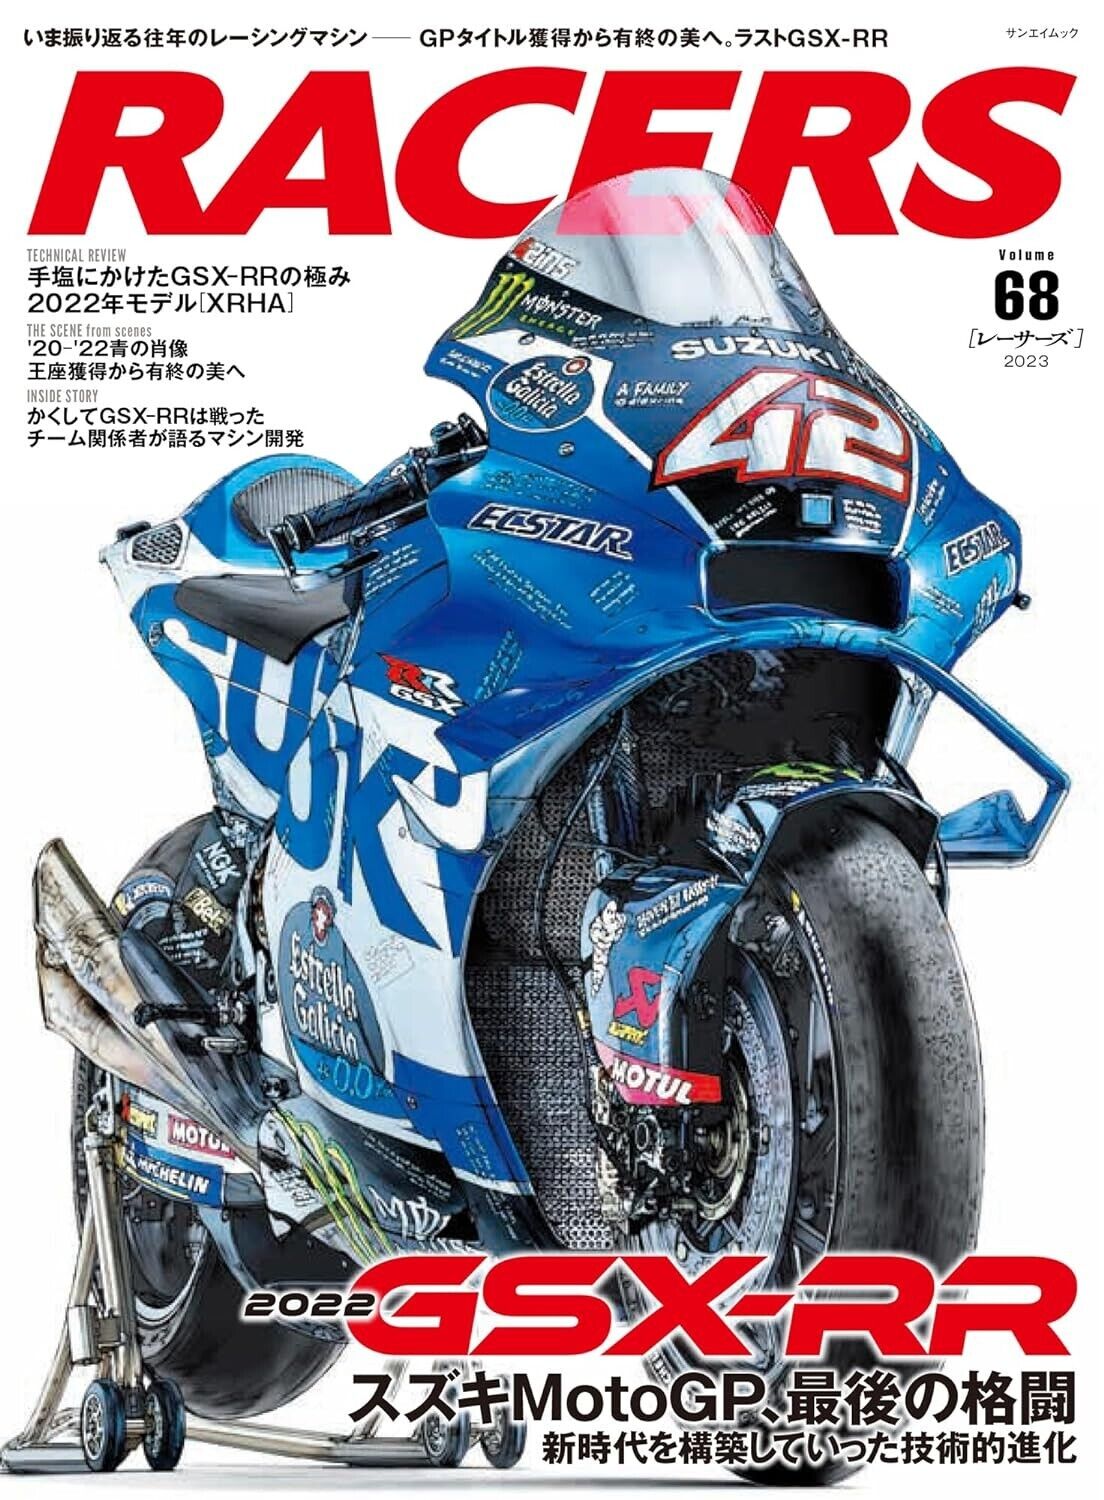 RACERS Vol.68 SUZUKI GSXRR  book Moto GP